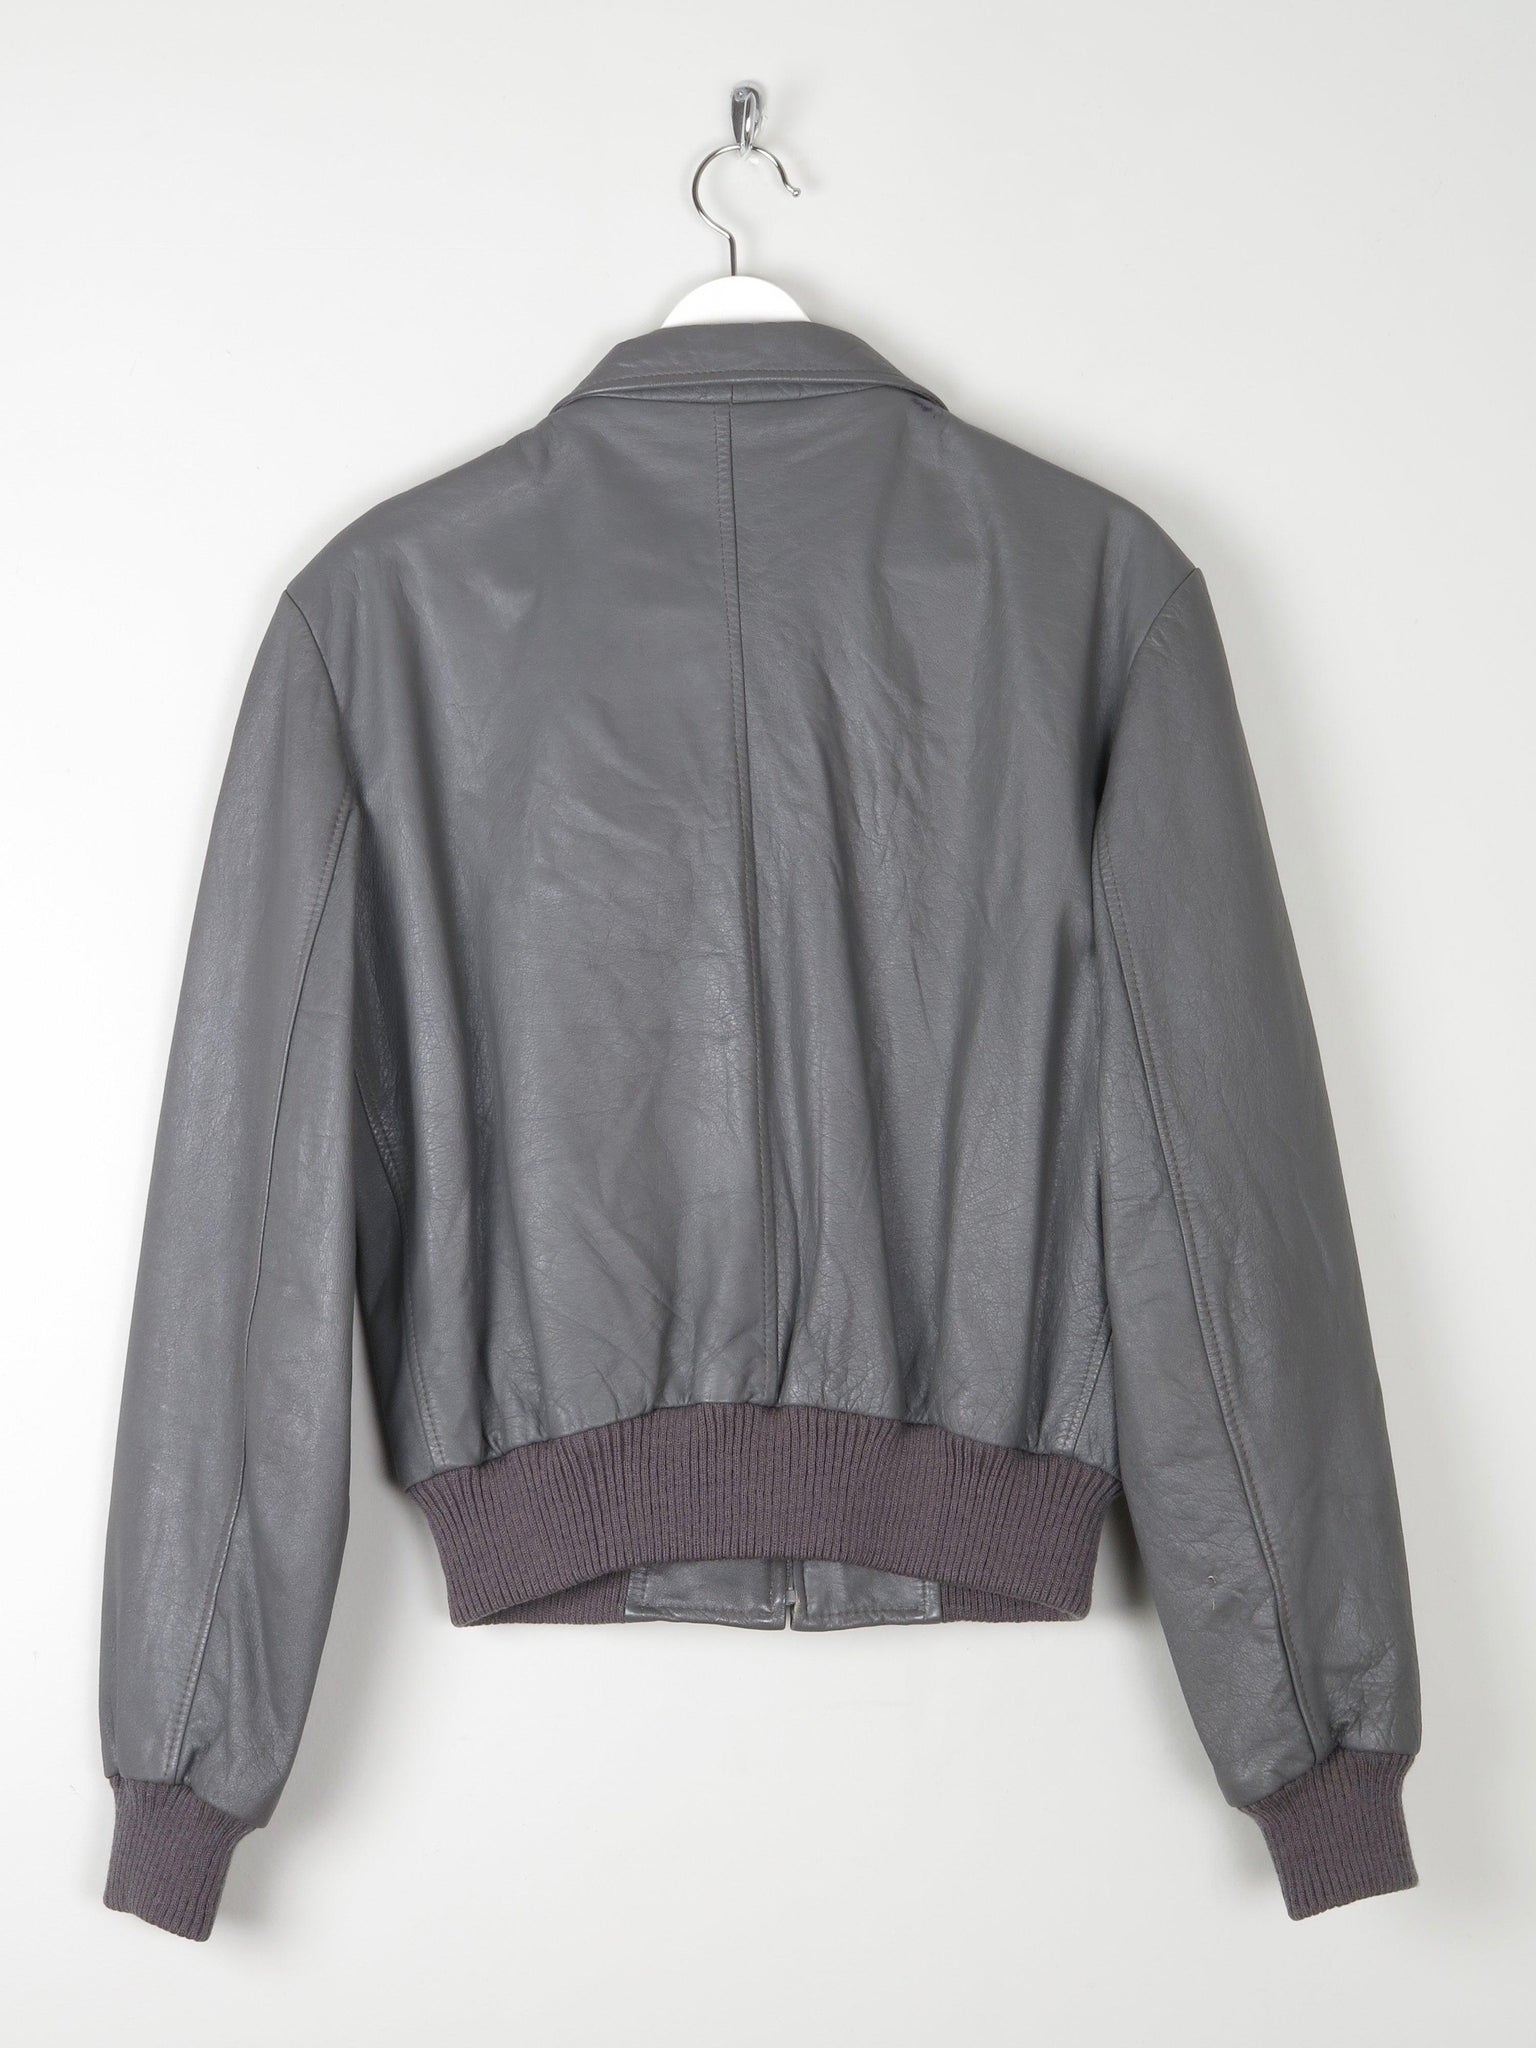 Men’s Grey Leather Bomber Jacket 1970s S/M - The Harlequin